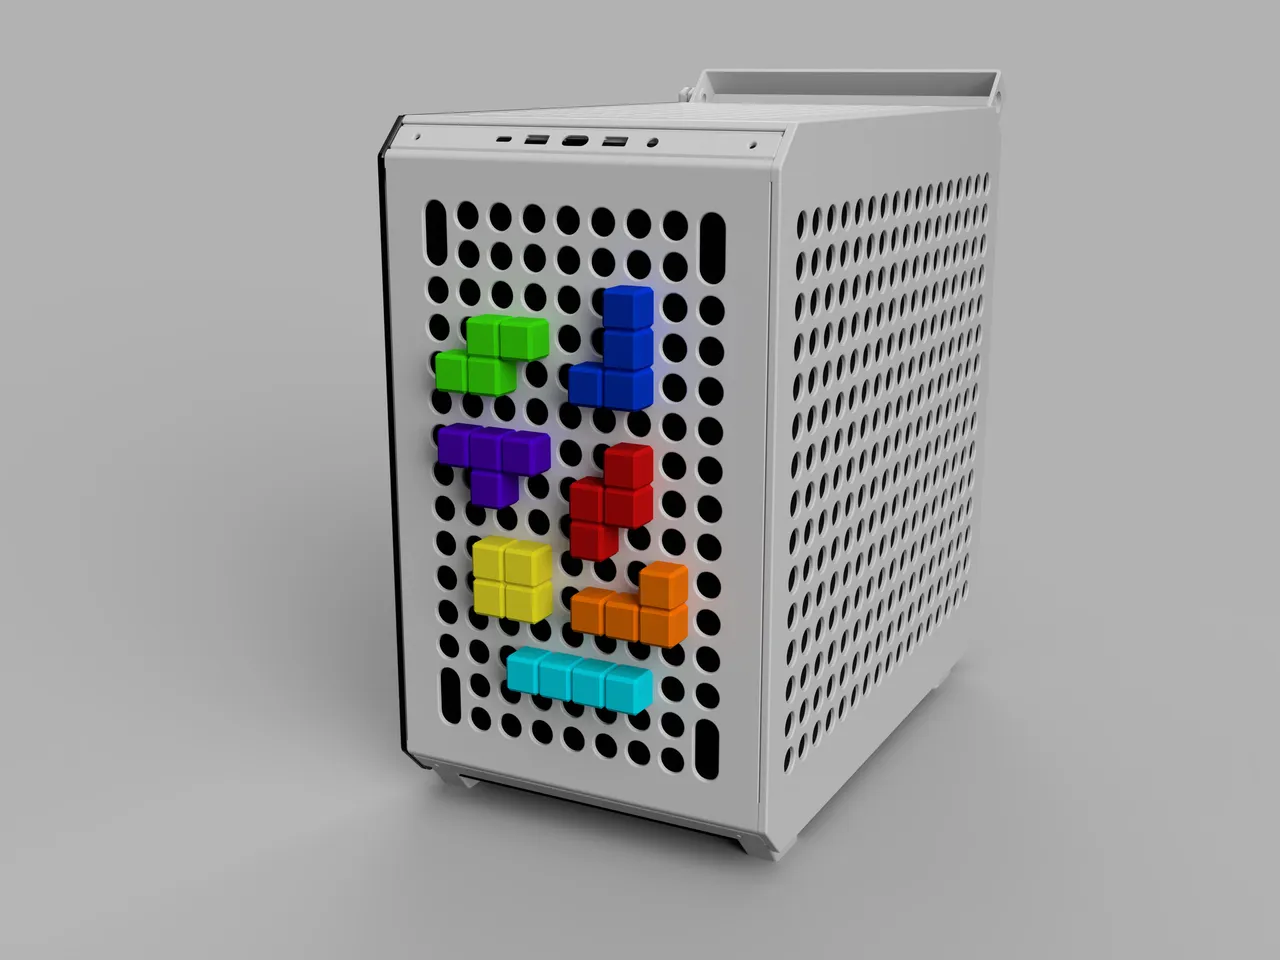 Mozaki Blocks Deluxe Windows PC Computer Game FUN Fast Shipping Makers of  Tetris 811930103378